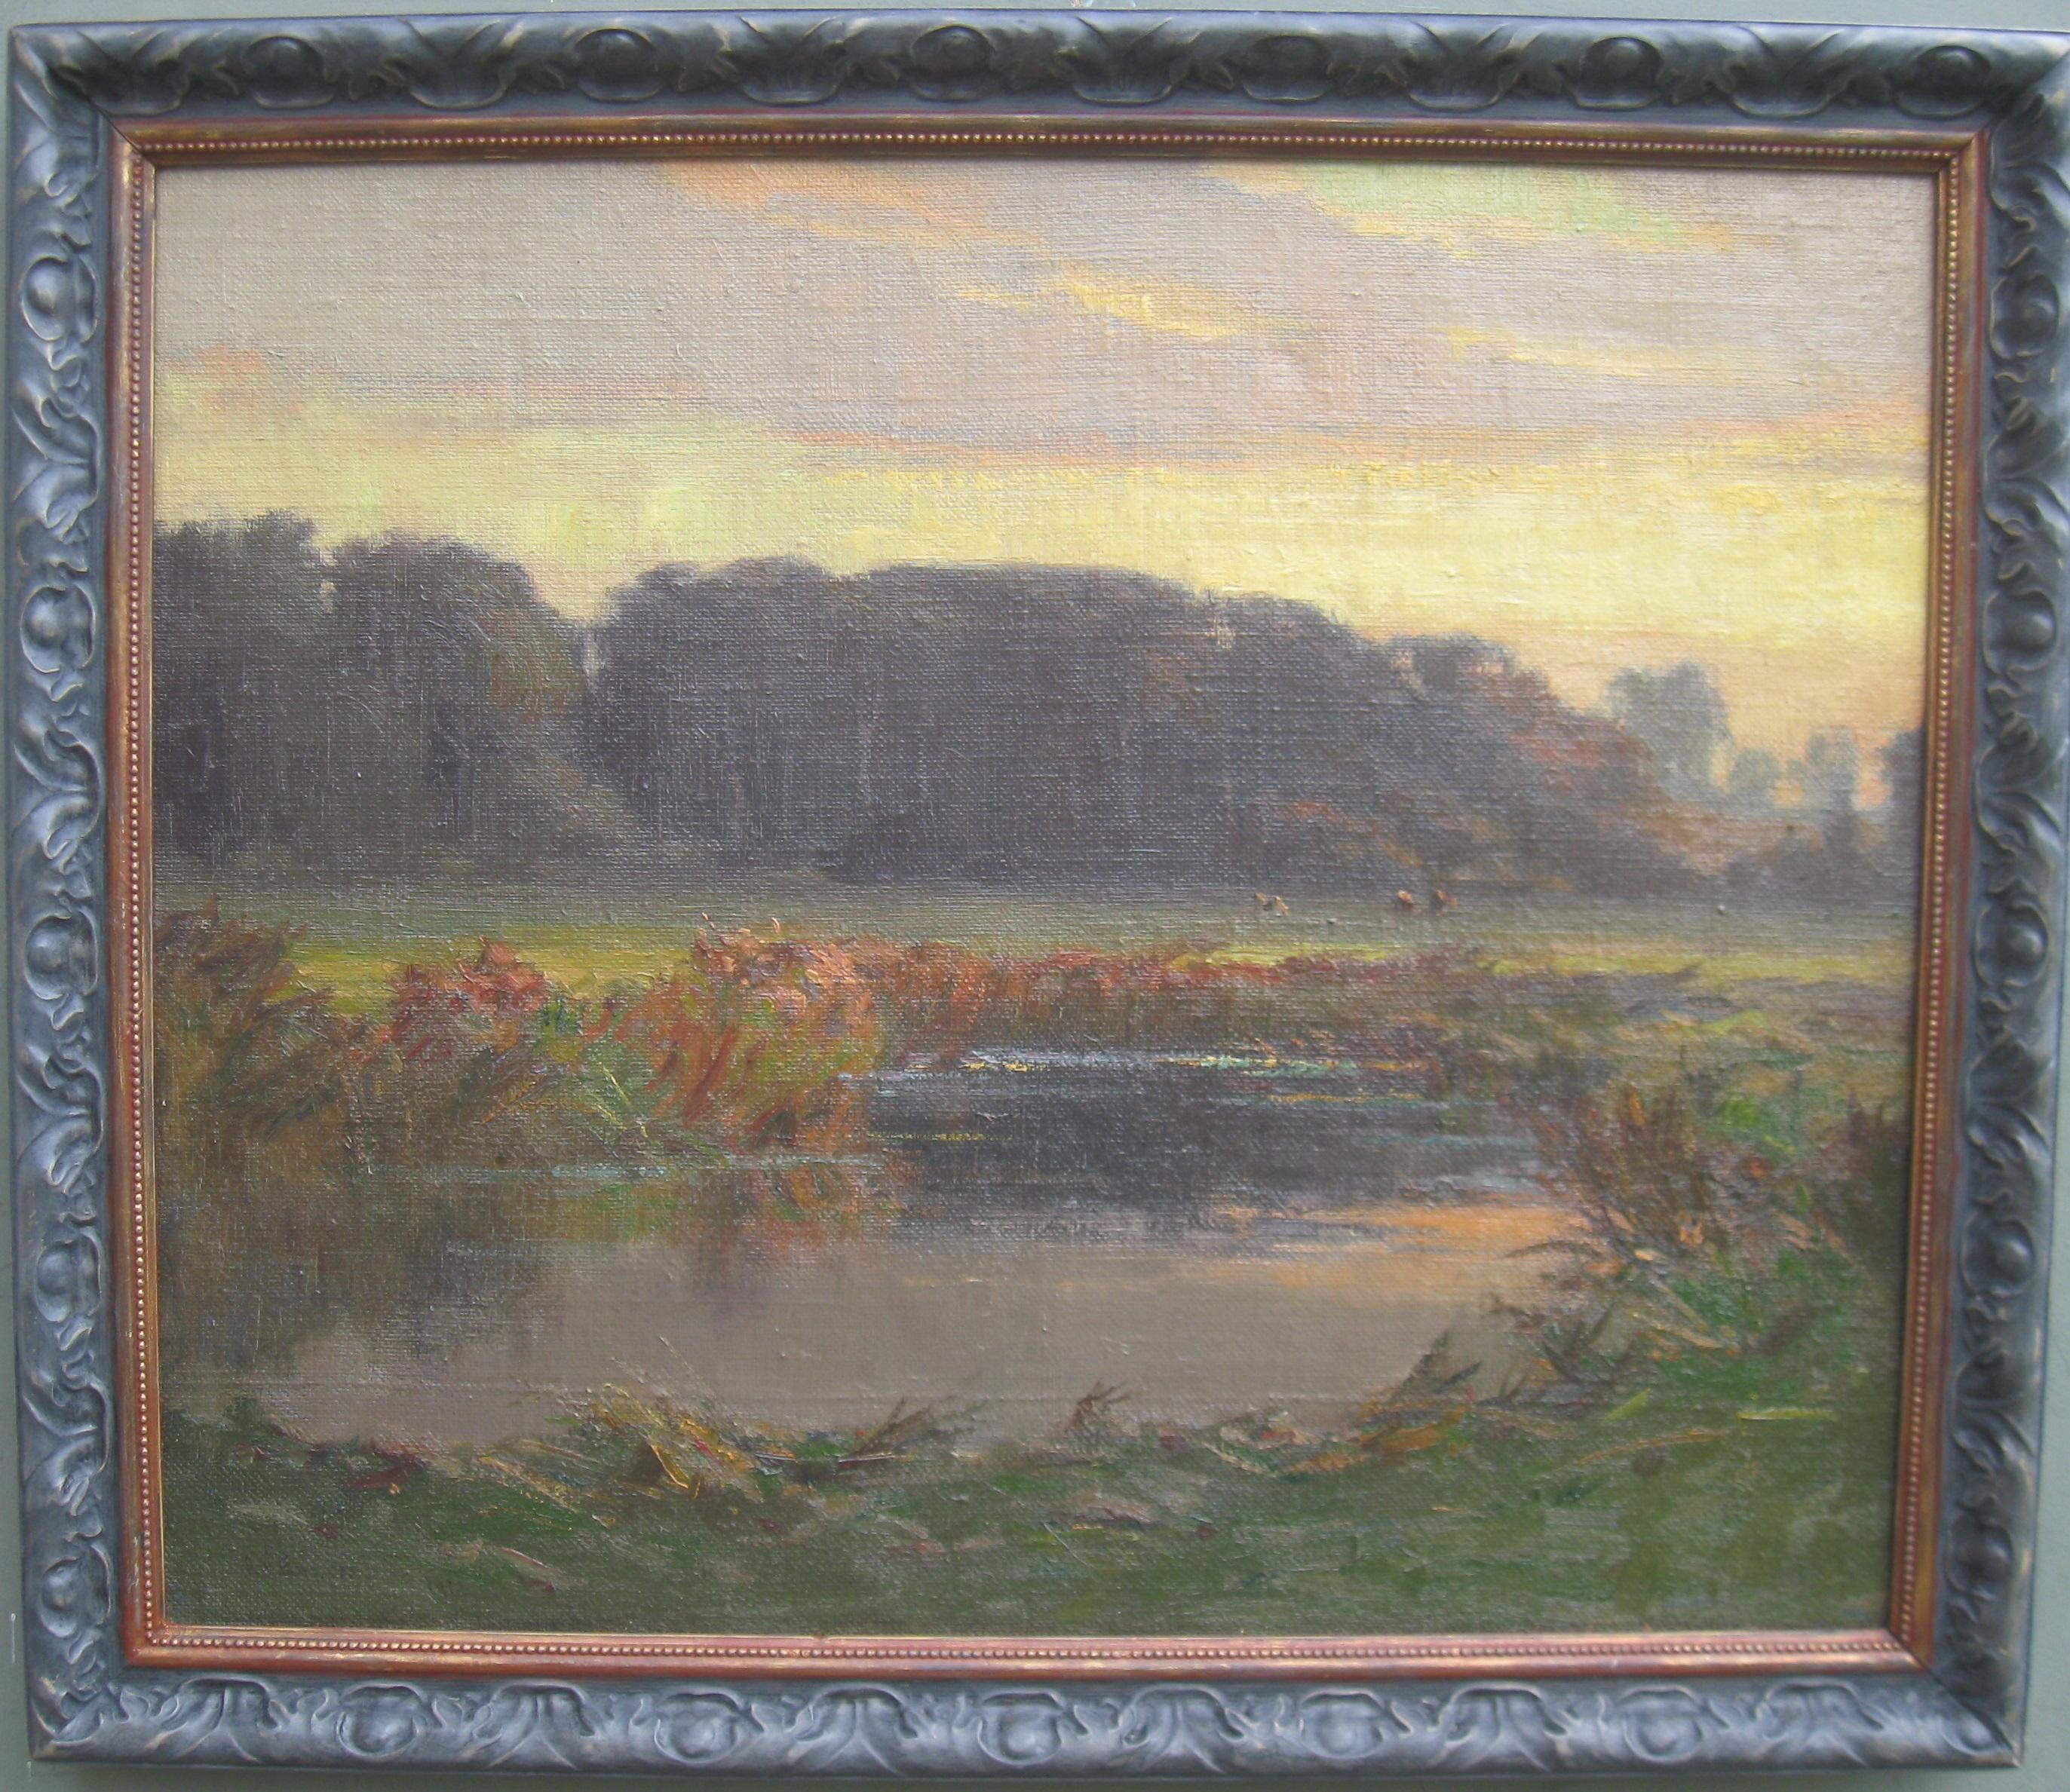 Augustus William Enness Landscape Painting - 'River Landscape at Dusk' large Impressionist oil on canvas circa 1930's